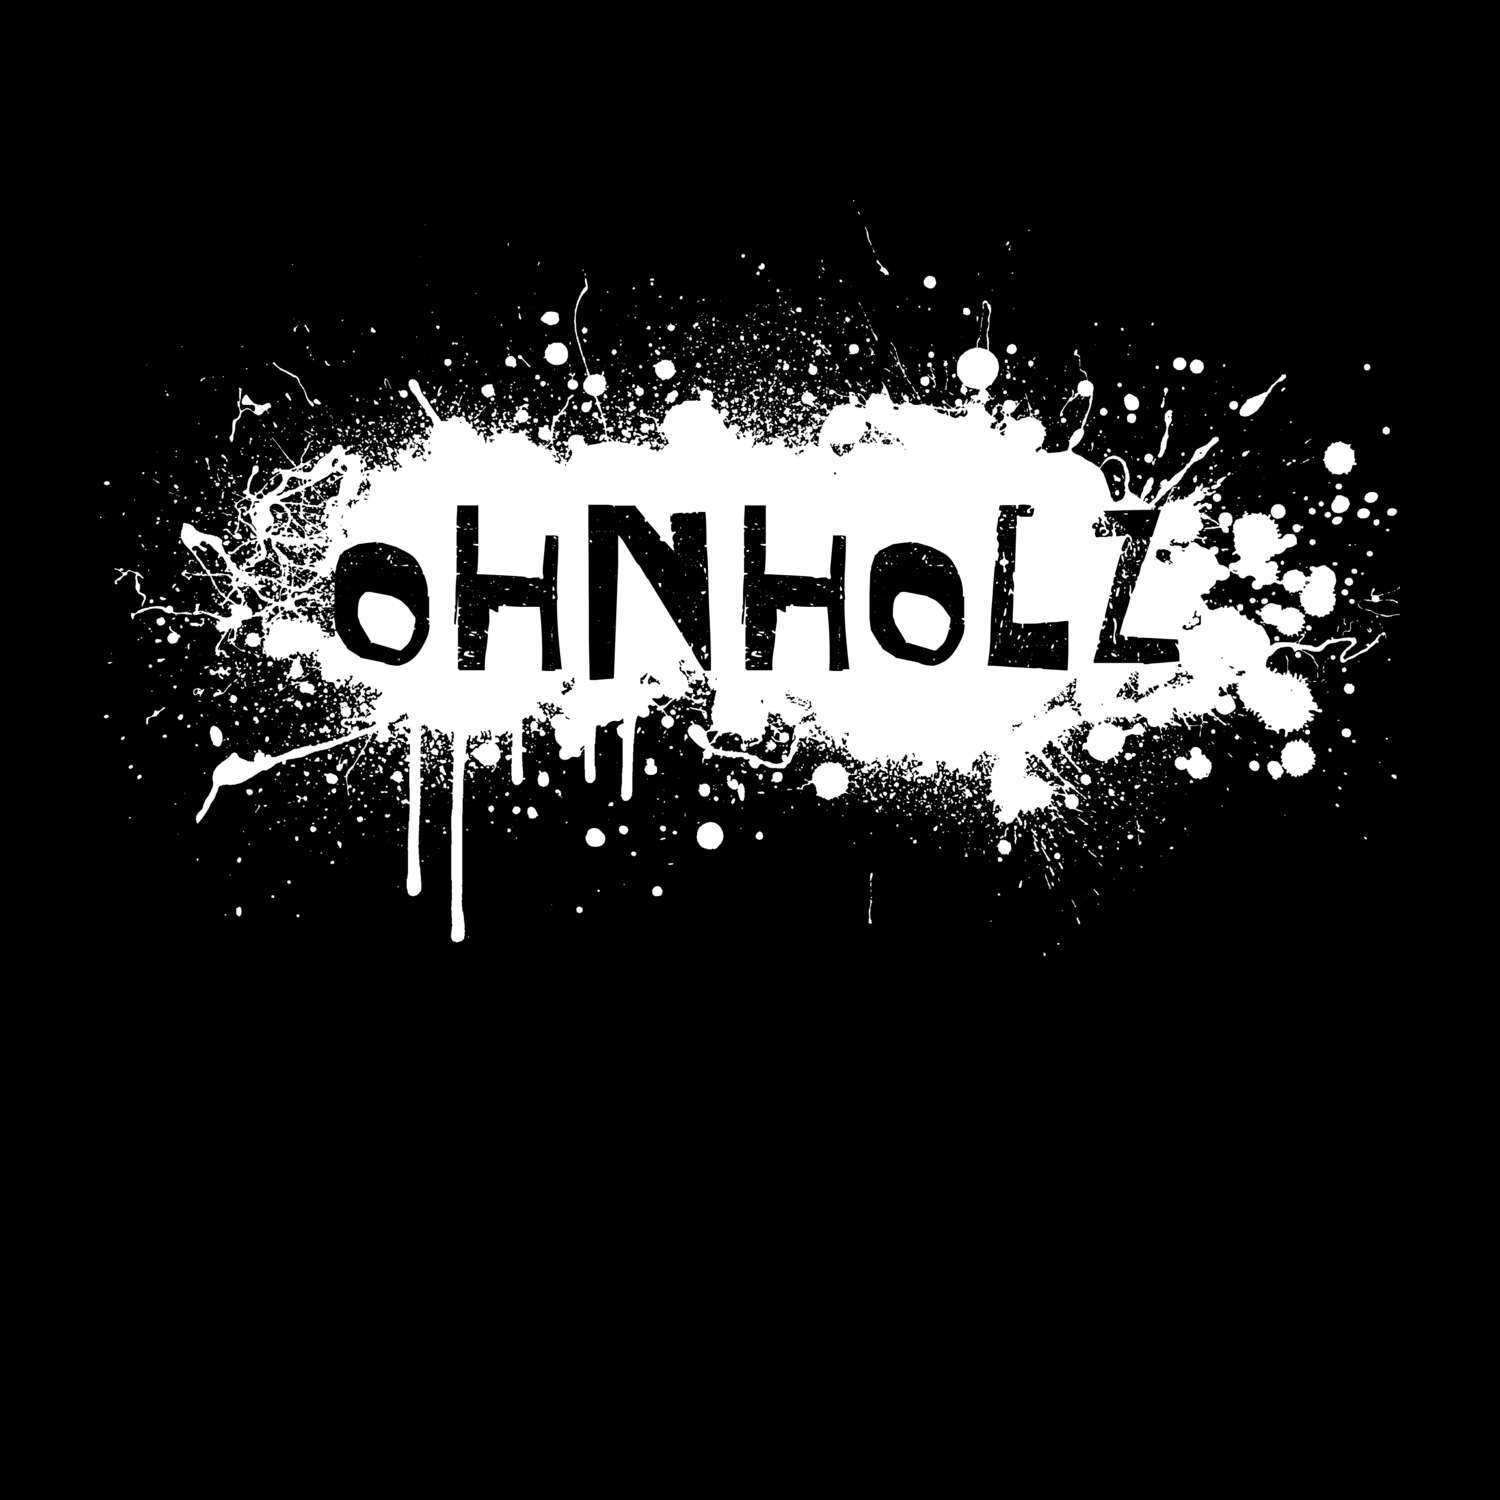 Ohnholz T-Shirt »Paint Splash Punk«